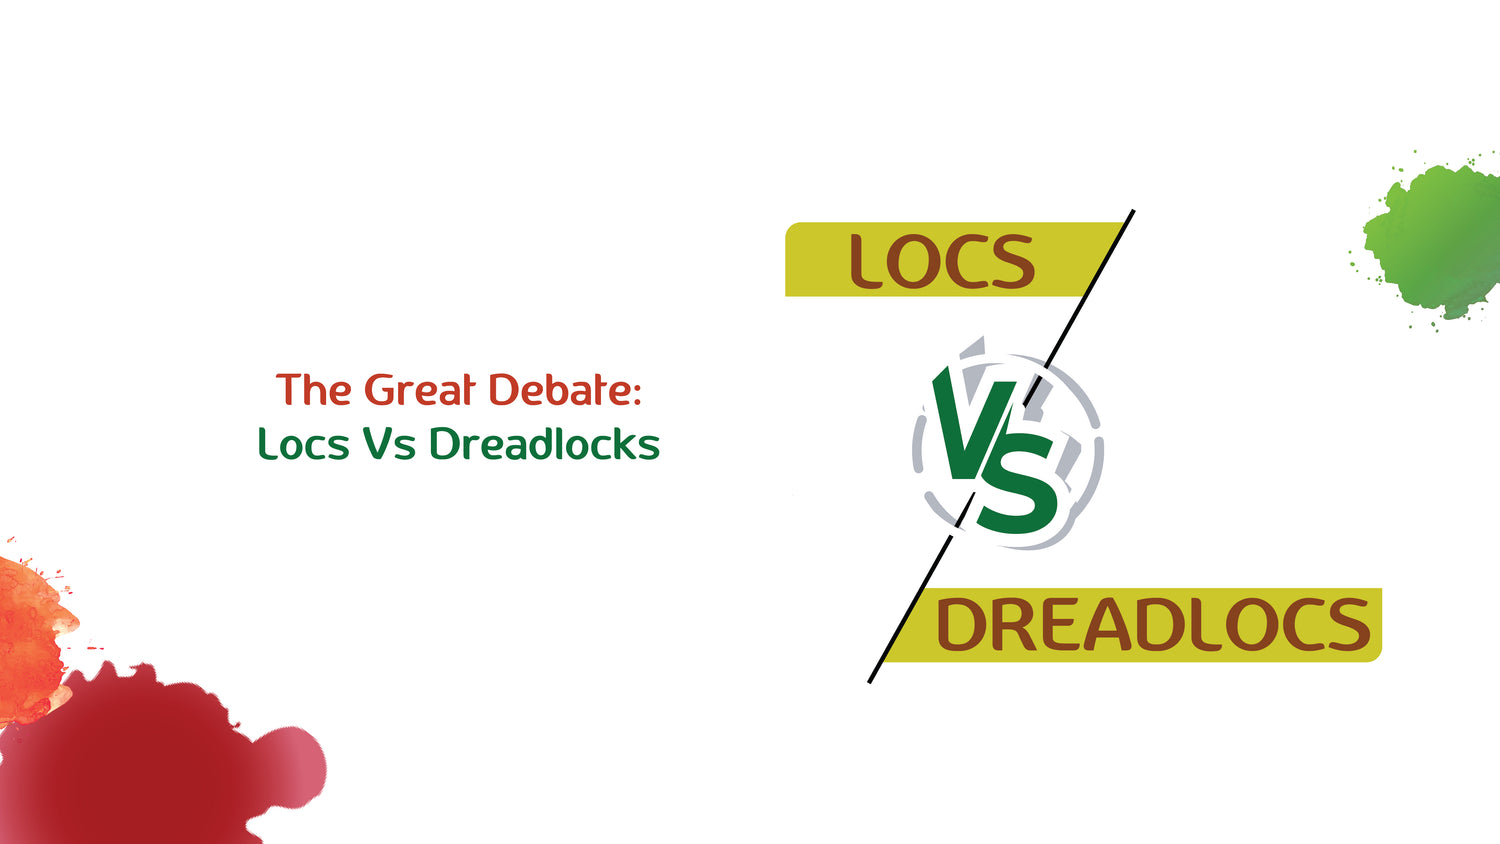 The Great Debate: Locs Vs Dreadlocks